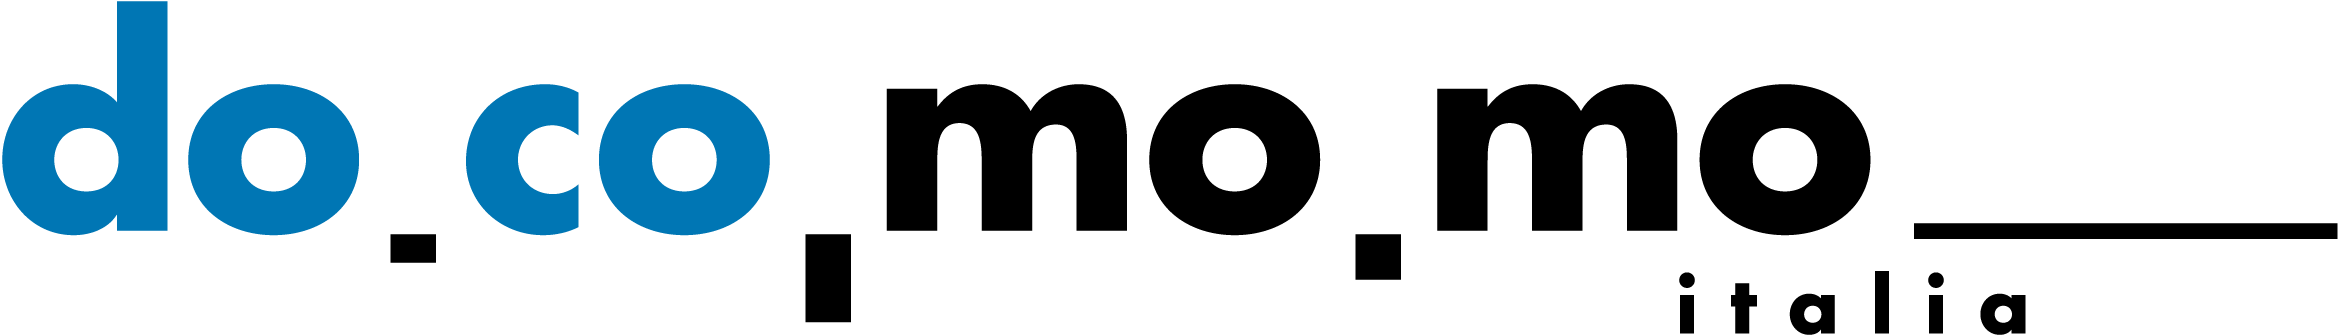 Logo Docomomo